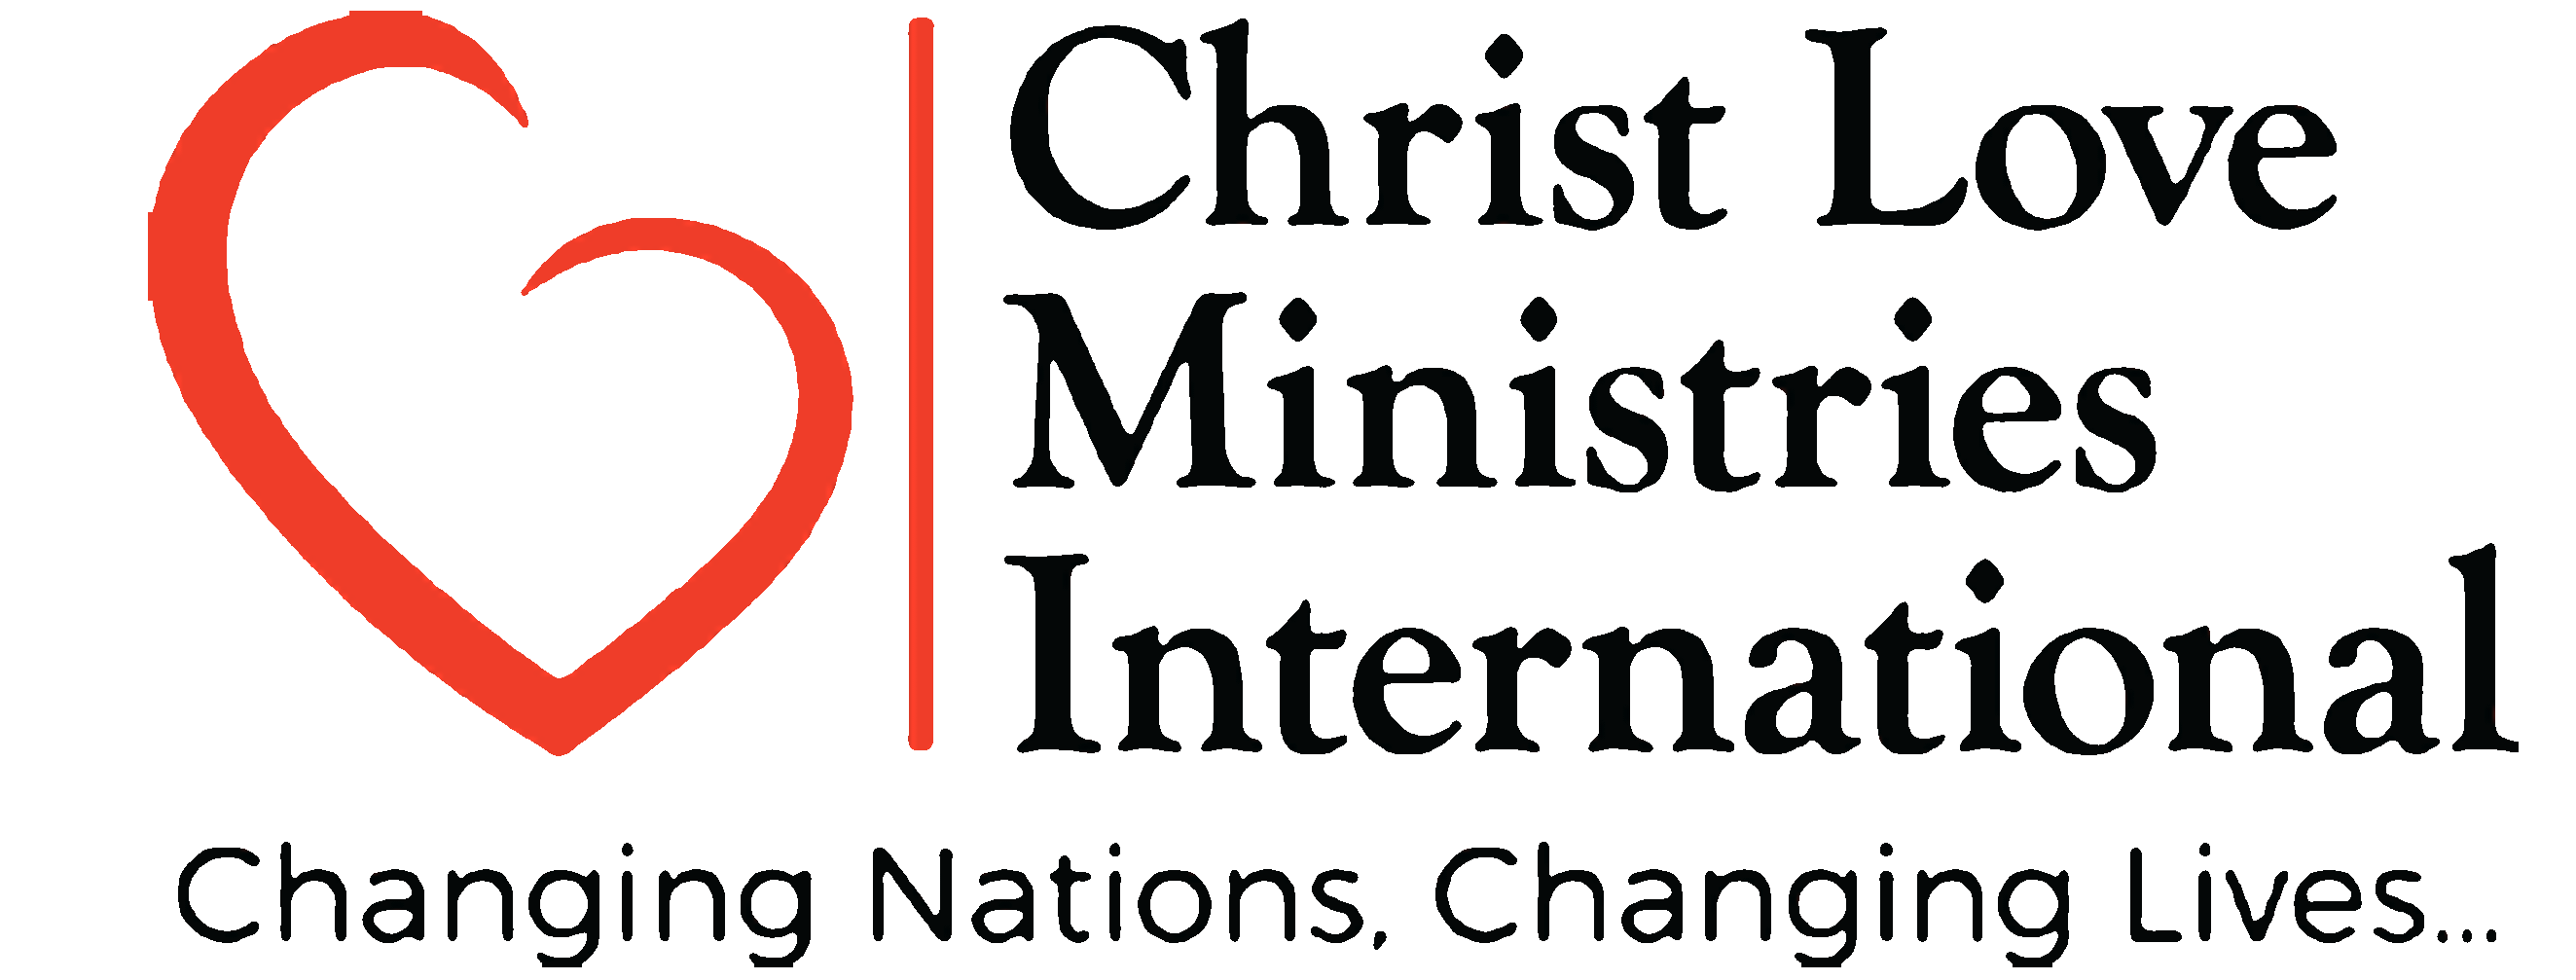 Christ Love Ministries International Logo